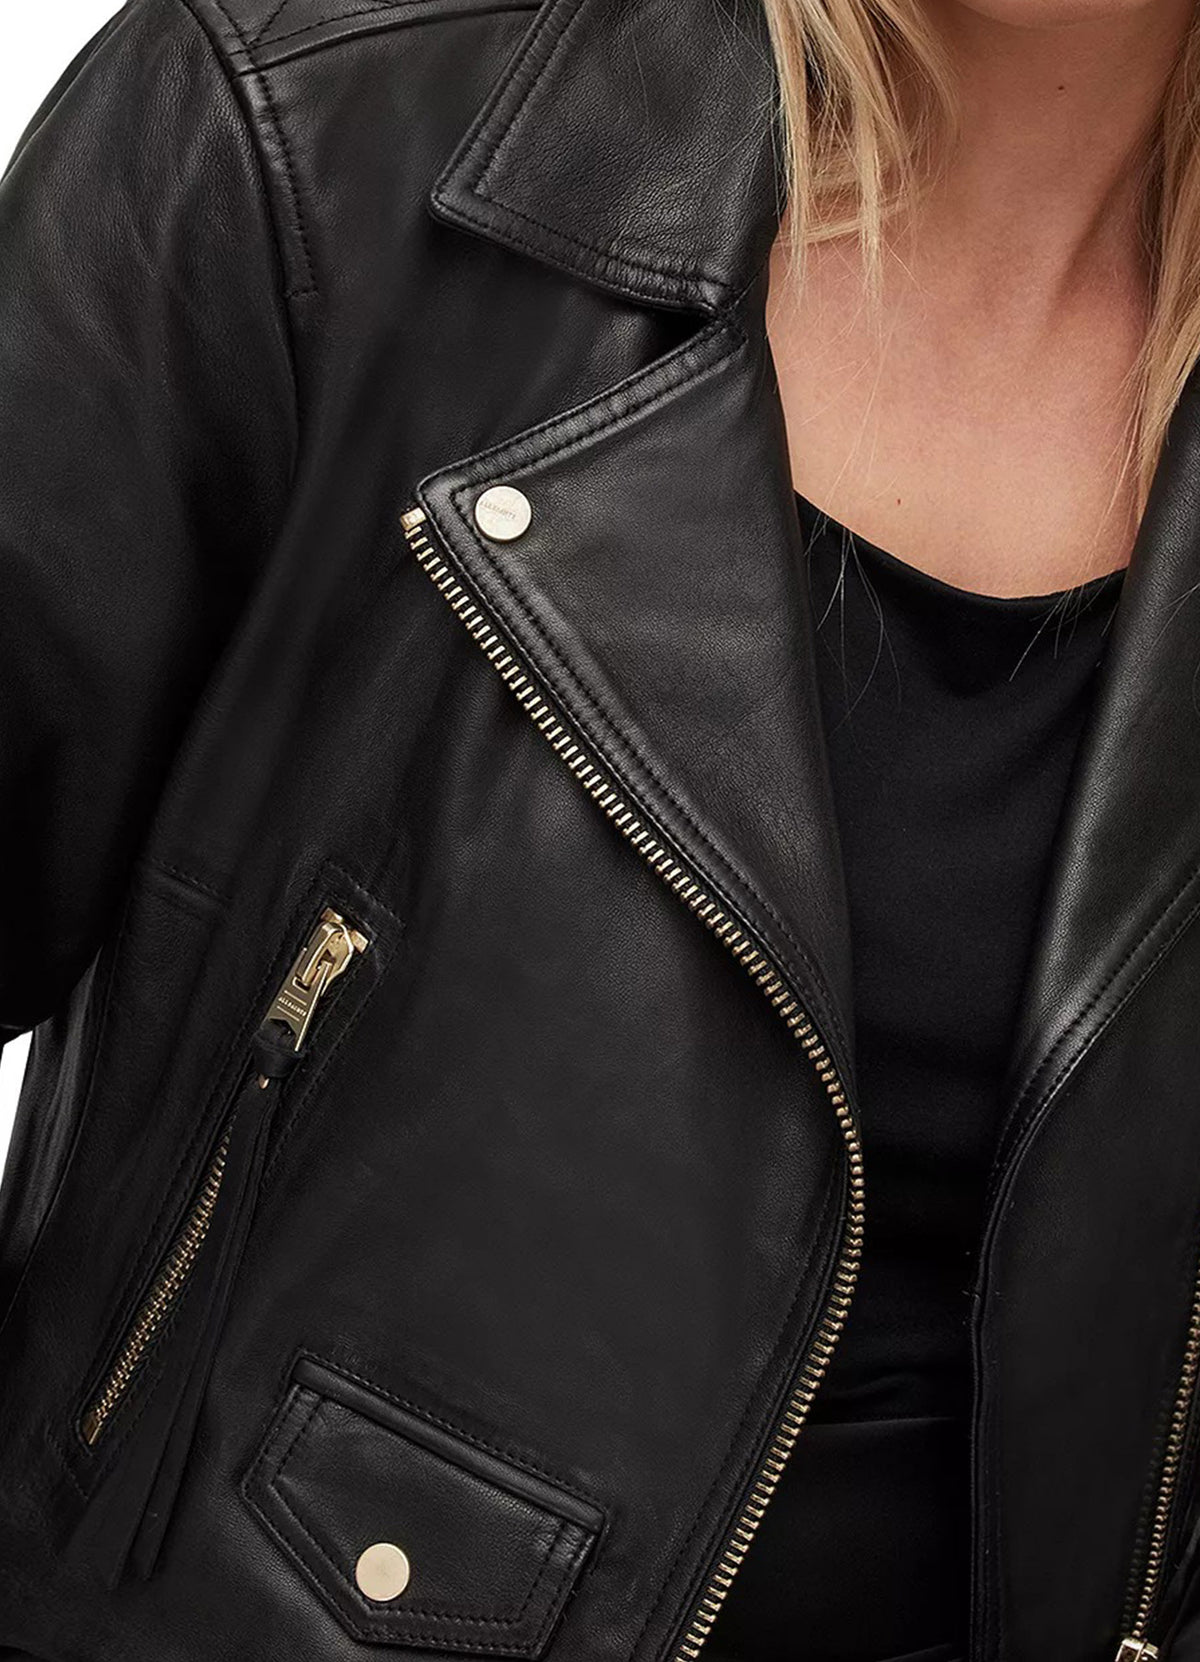 Womens Short Length Black Biker Leather Jacket | Shop Now!